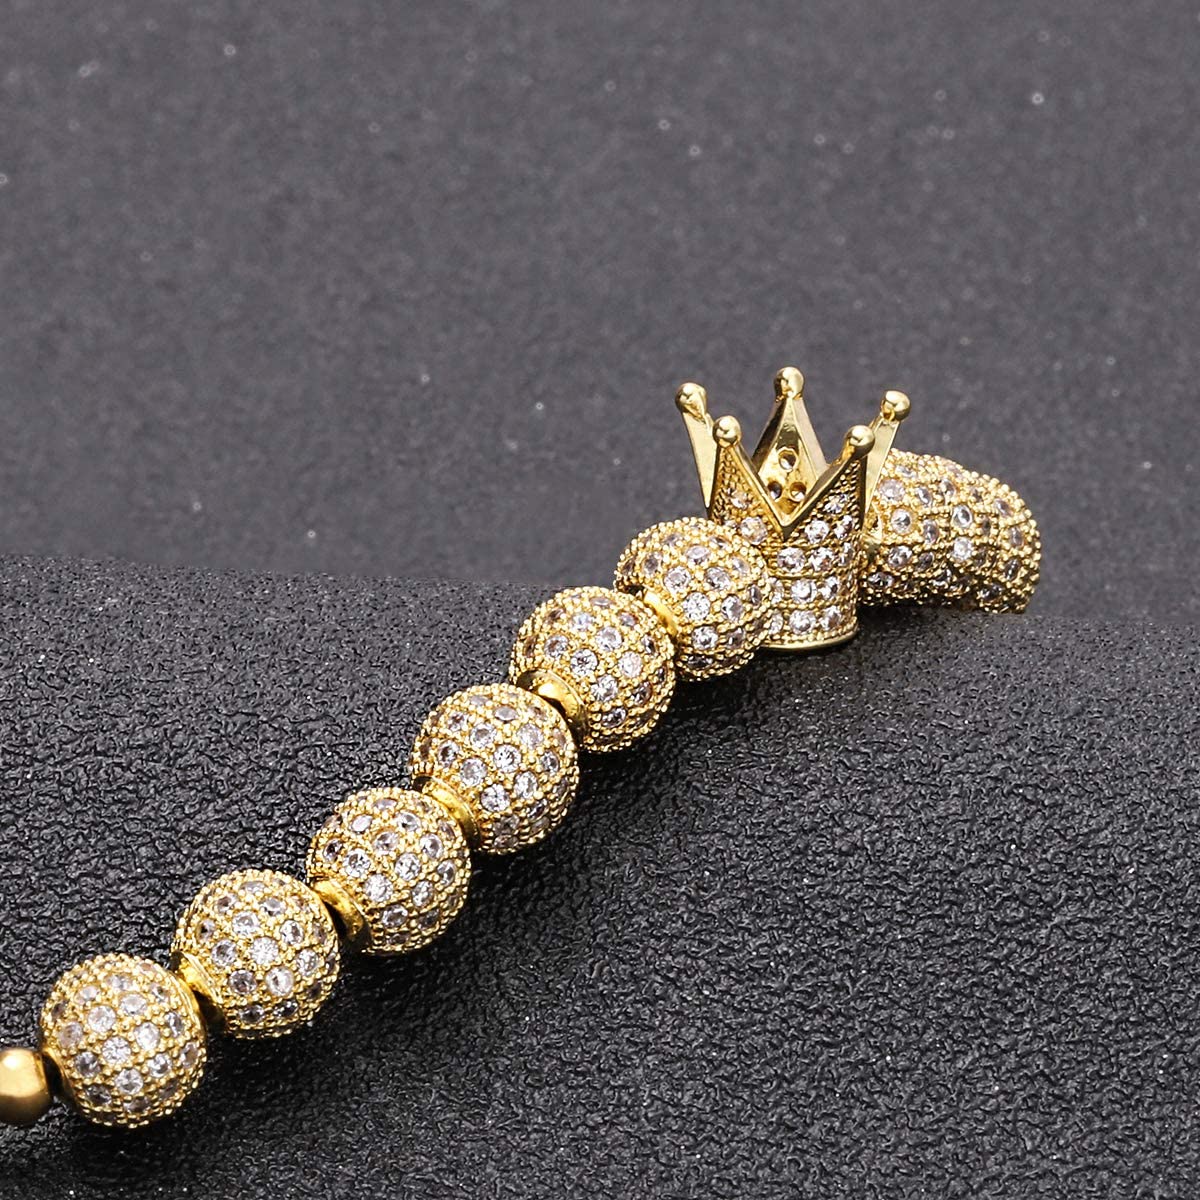 Gold / Silver Handmade Crown Luxury Jewelry Bracelets Allbrand supreme 